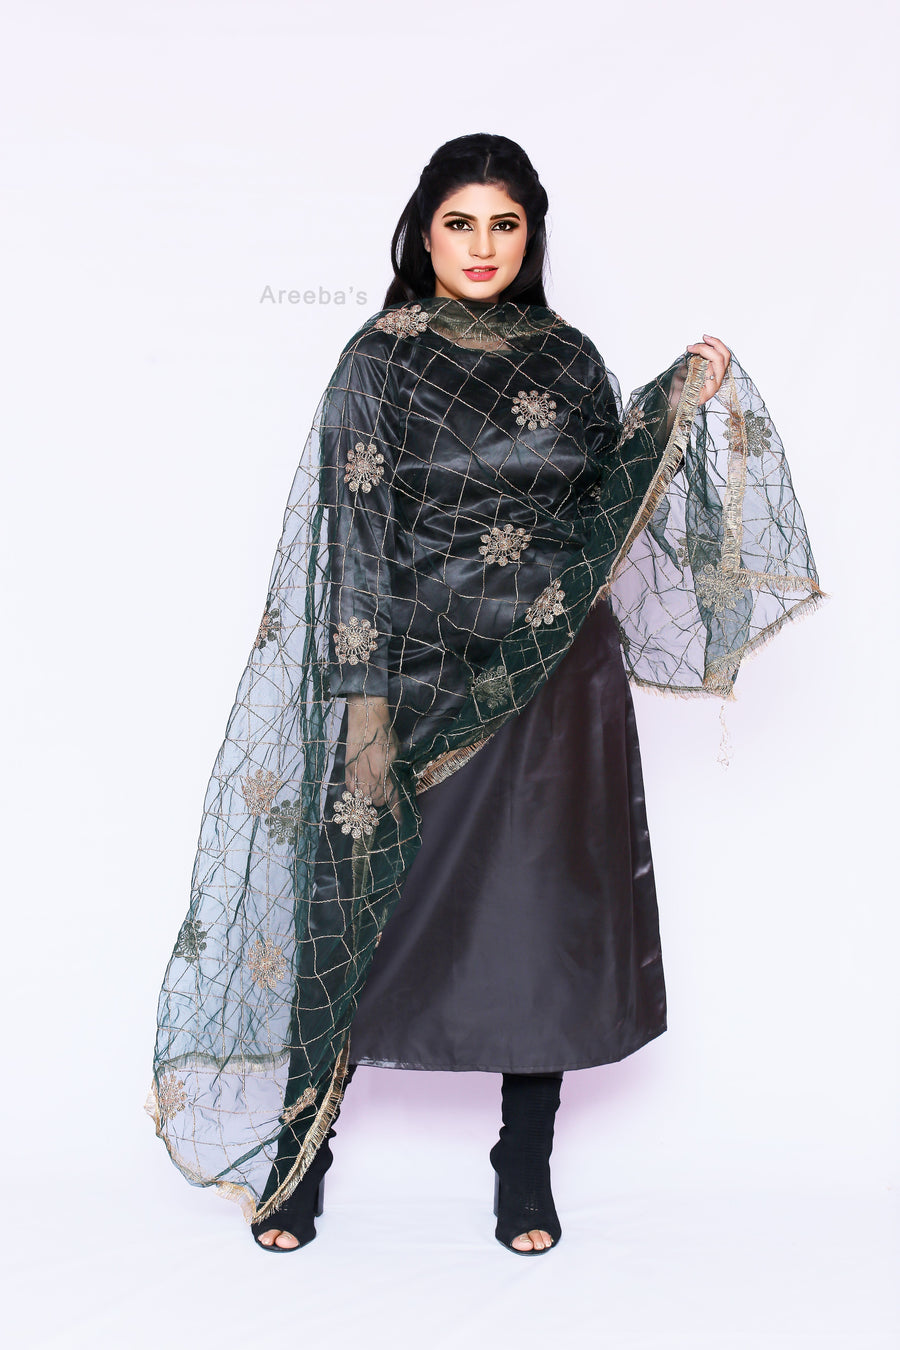 Gable Green Net- Areeba's Couture